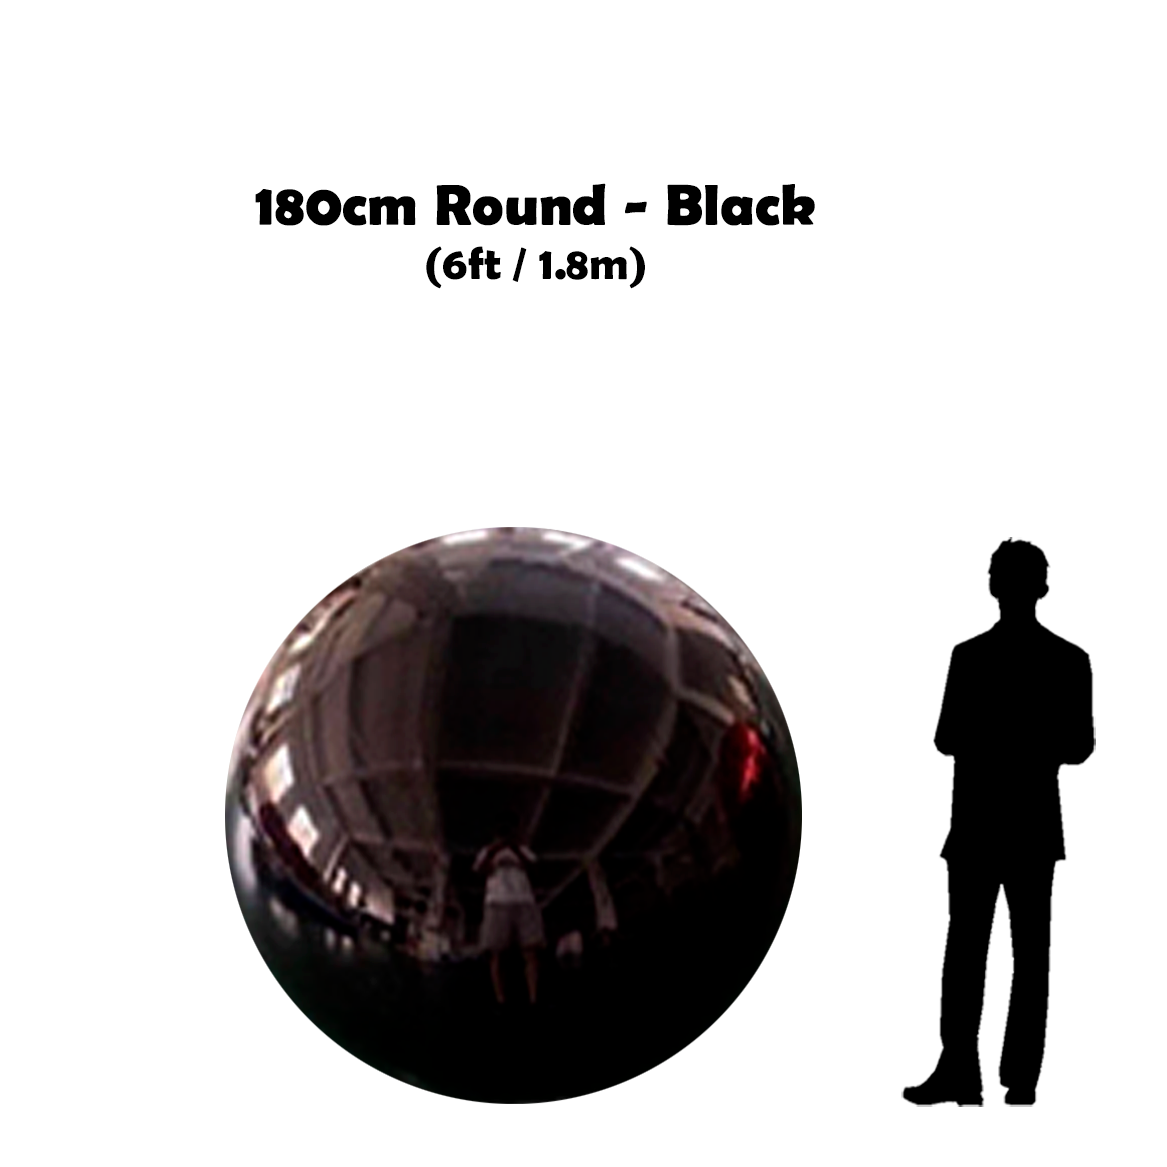 180 cm Big Black ball beside 5'10 guy silhouette 